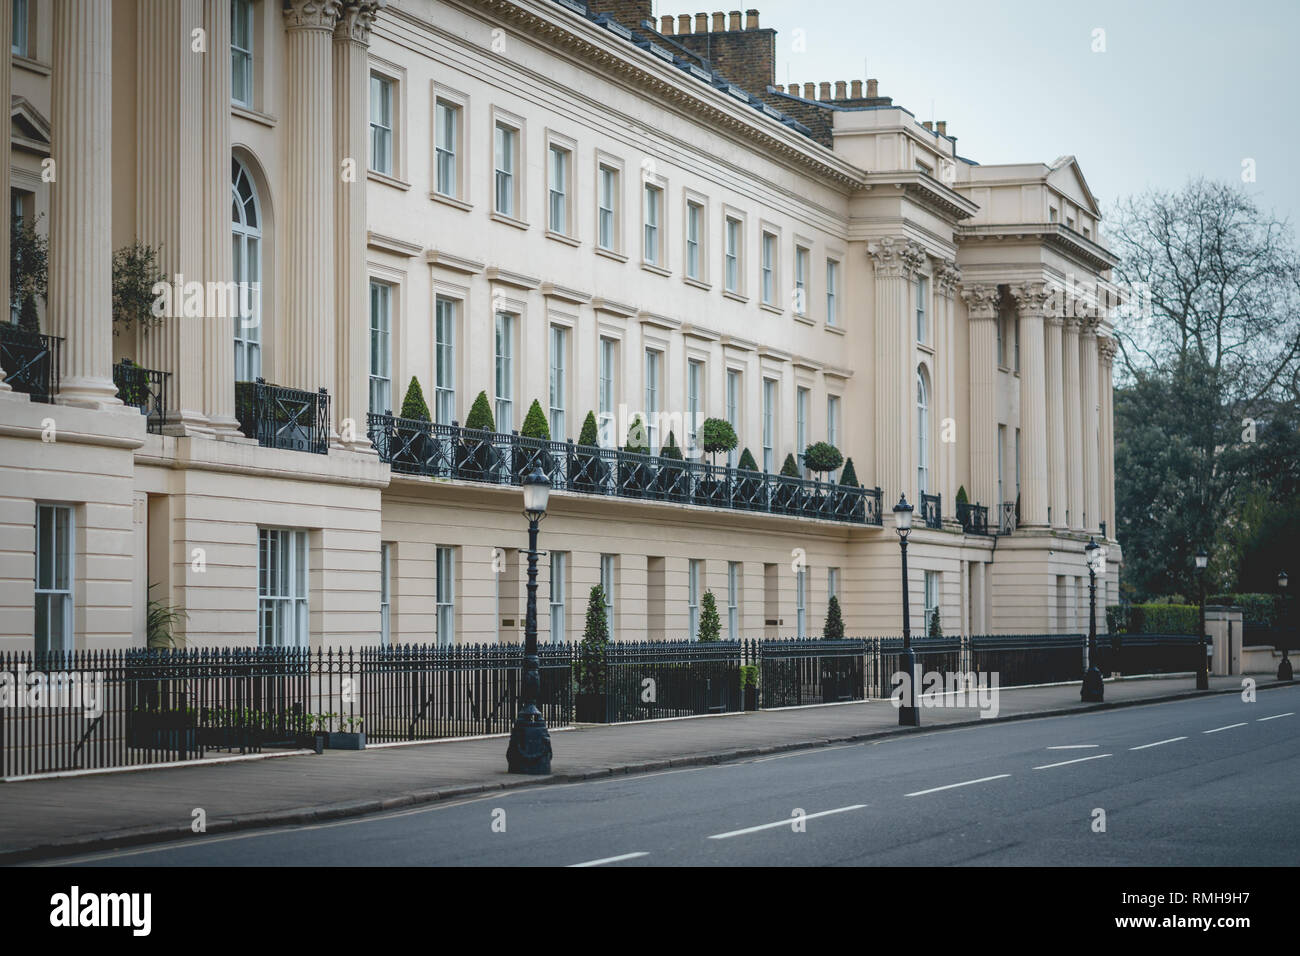 London, UK - April, 2018. Regency architecture terraced houses in Marylebone, central London. Stock Photo